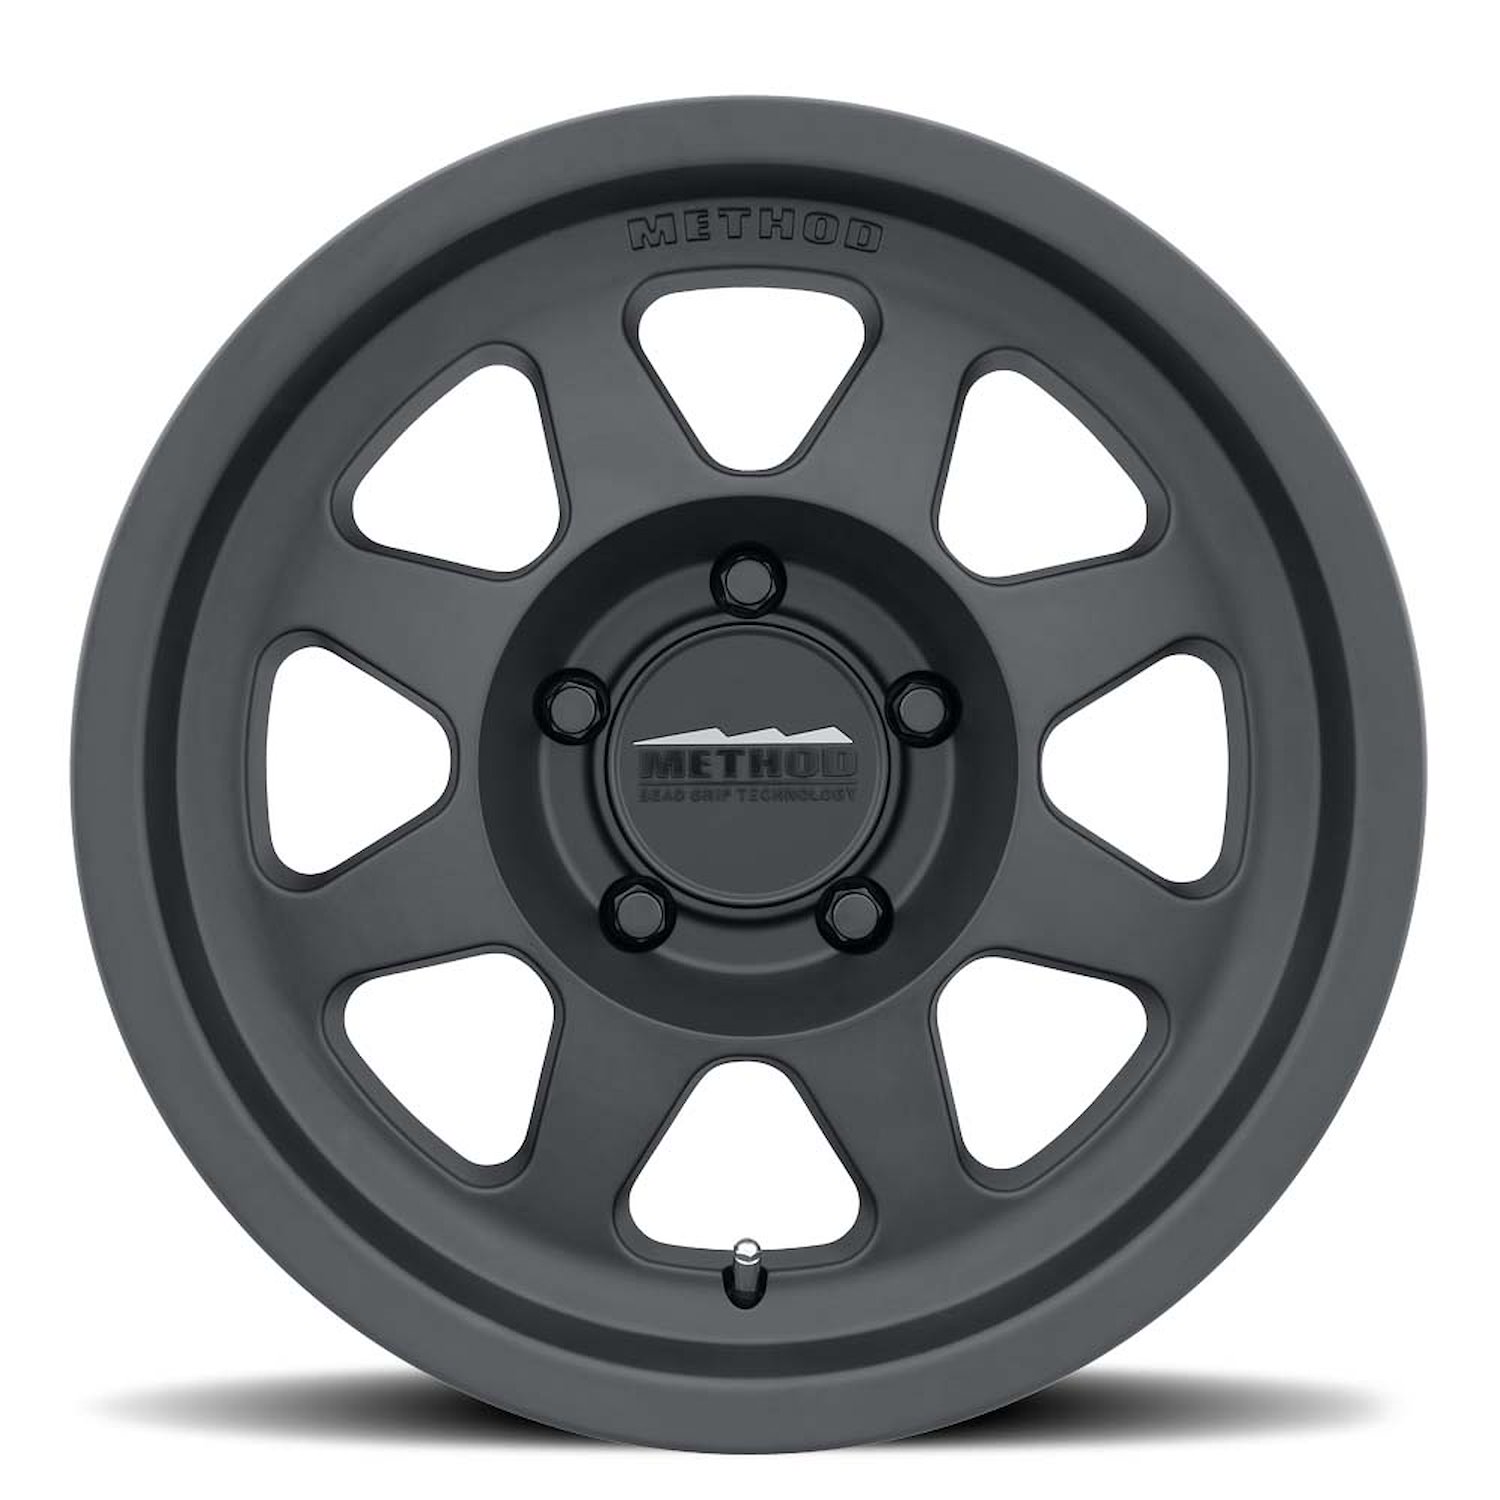 MR70177549530 TRAIL MR701 Bead Grip Wheel [Size: 17" x 7.5"] Matte Black